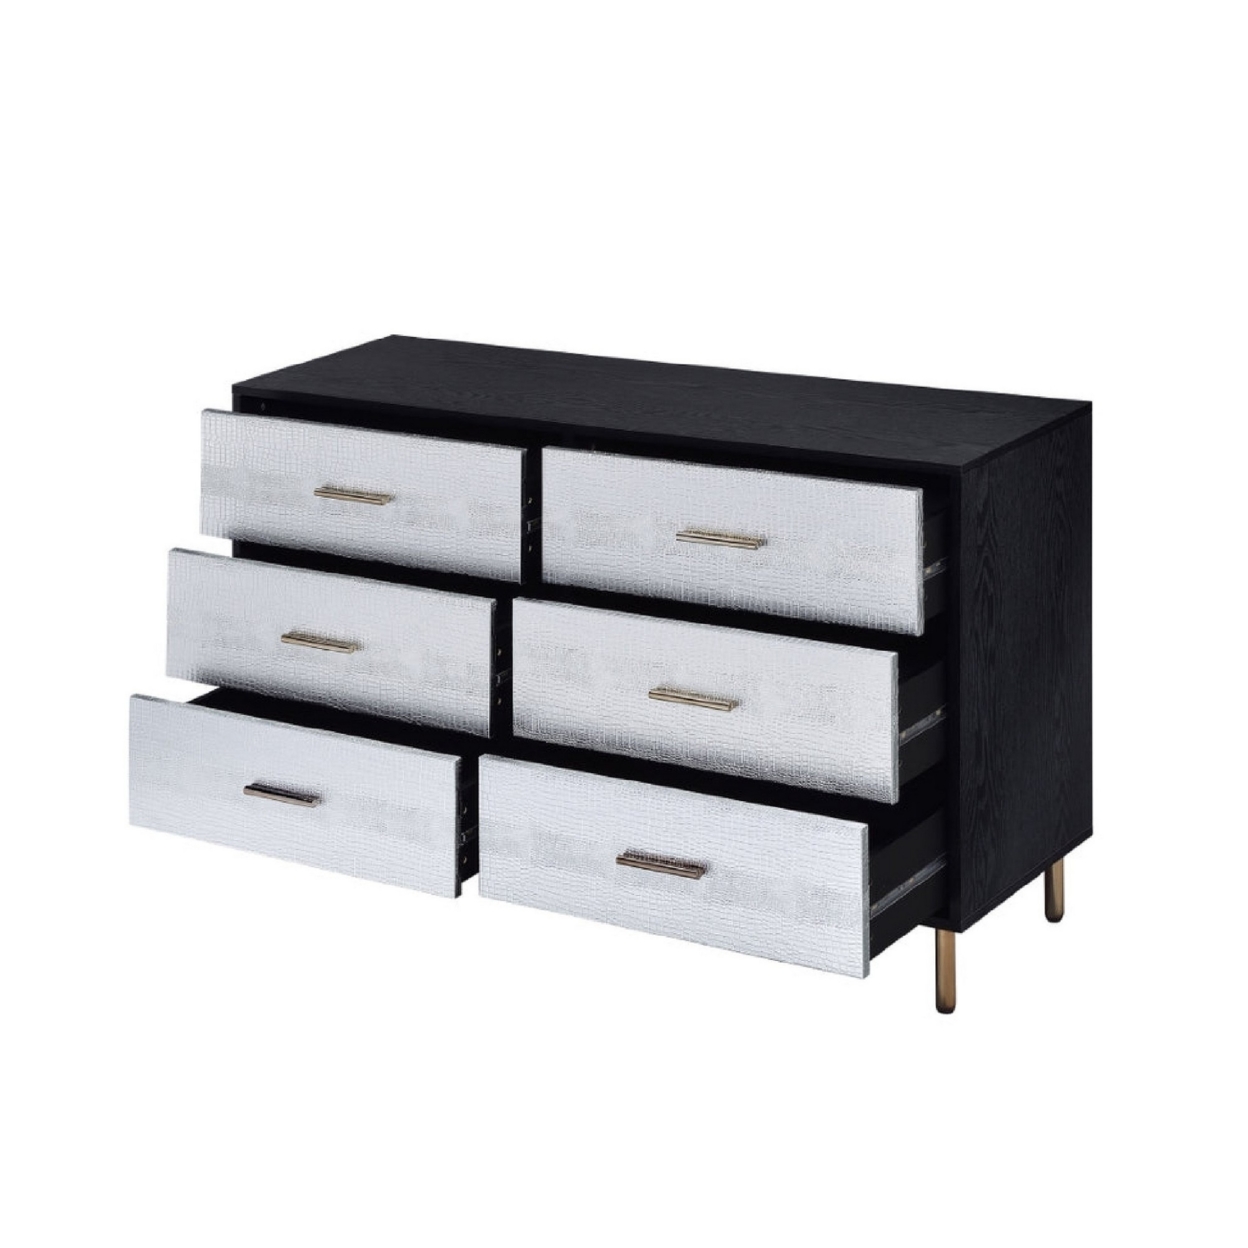 Emily 47 Inch Wood Side Dresser With 6 Drawers, Metal Bar Handles, Black- Saltoro Sherpi